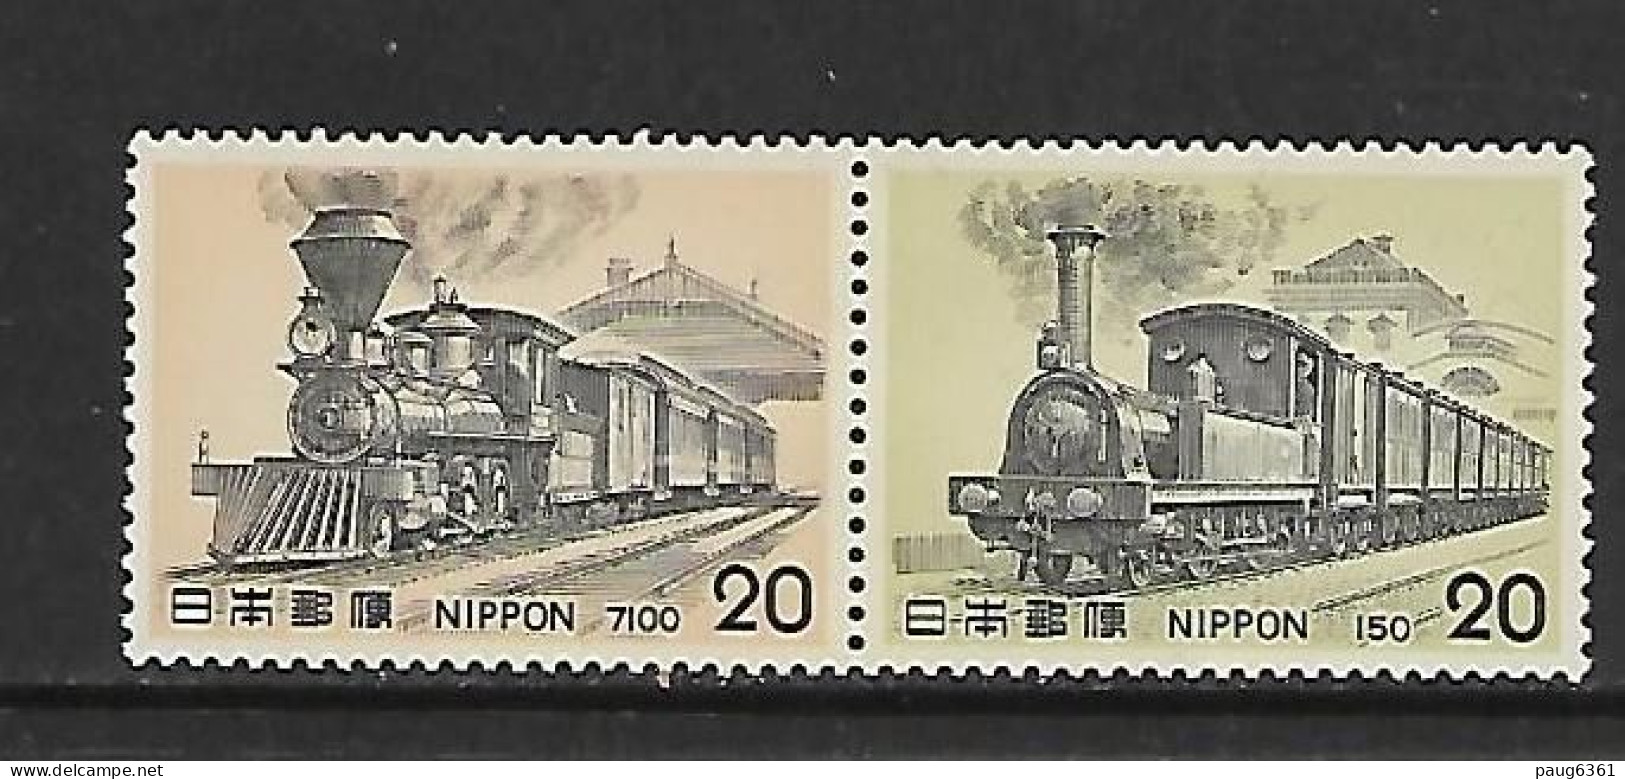 JAPON 1975 TRAINS YVERT N°11459/1160 NEUF MNH** - Trains